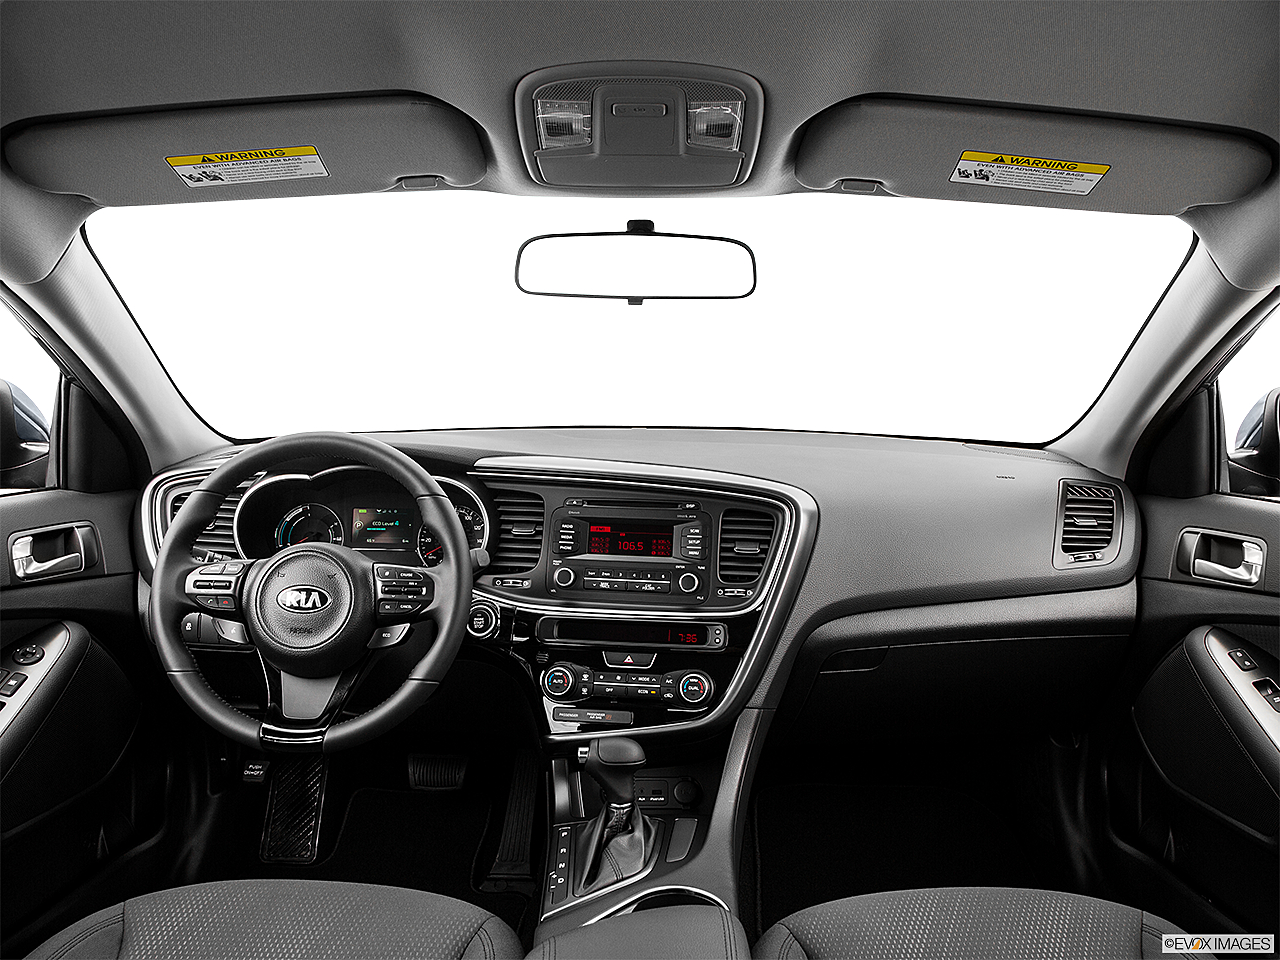 2015 Kia Optima Hybrid 4dr Sedan - Research - GrooveCar